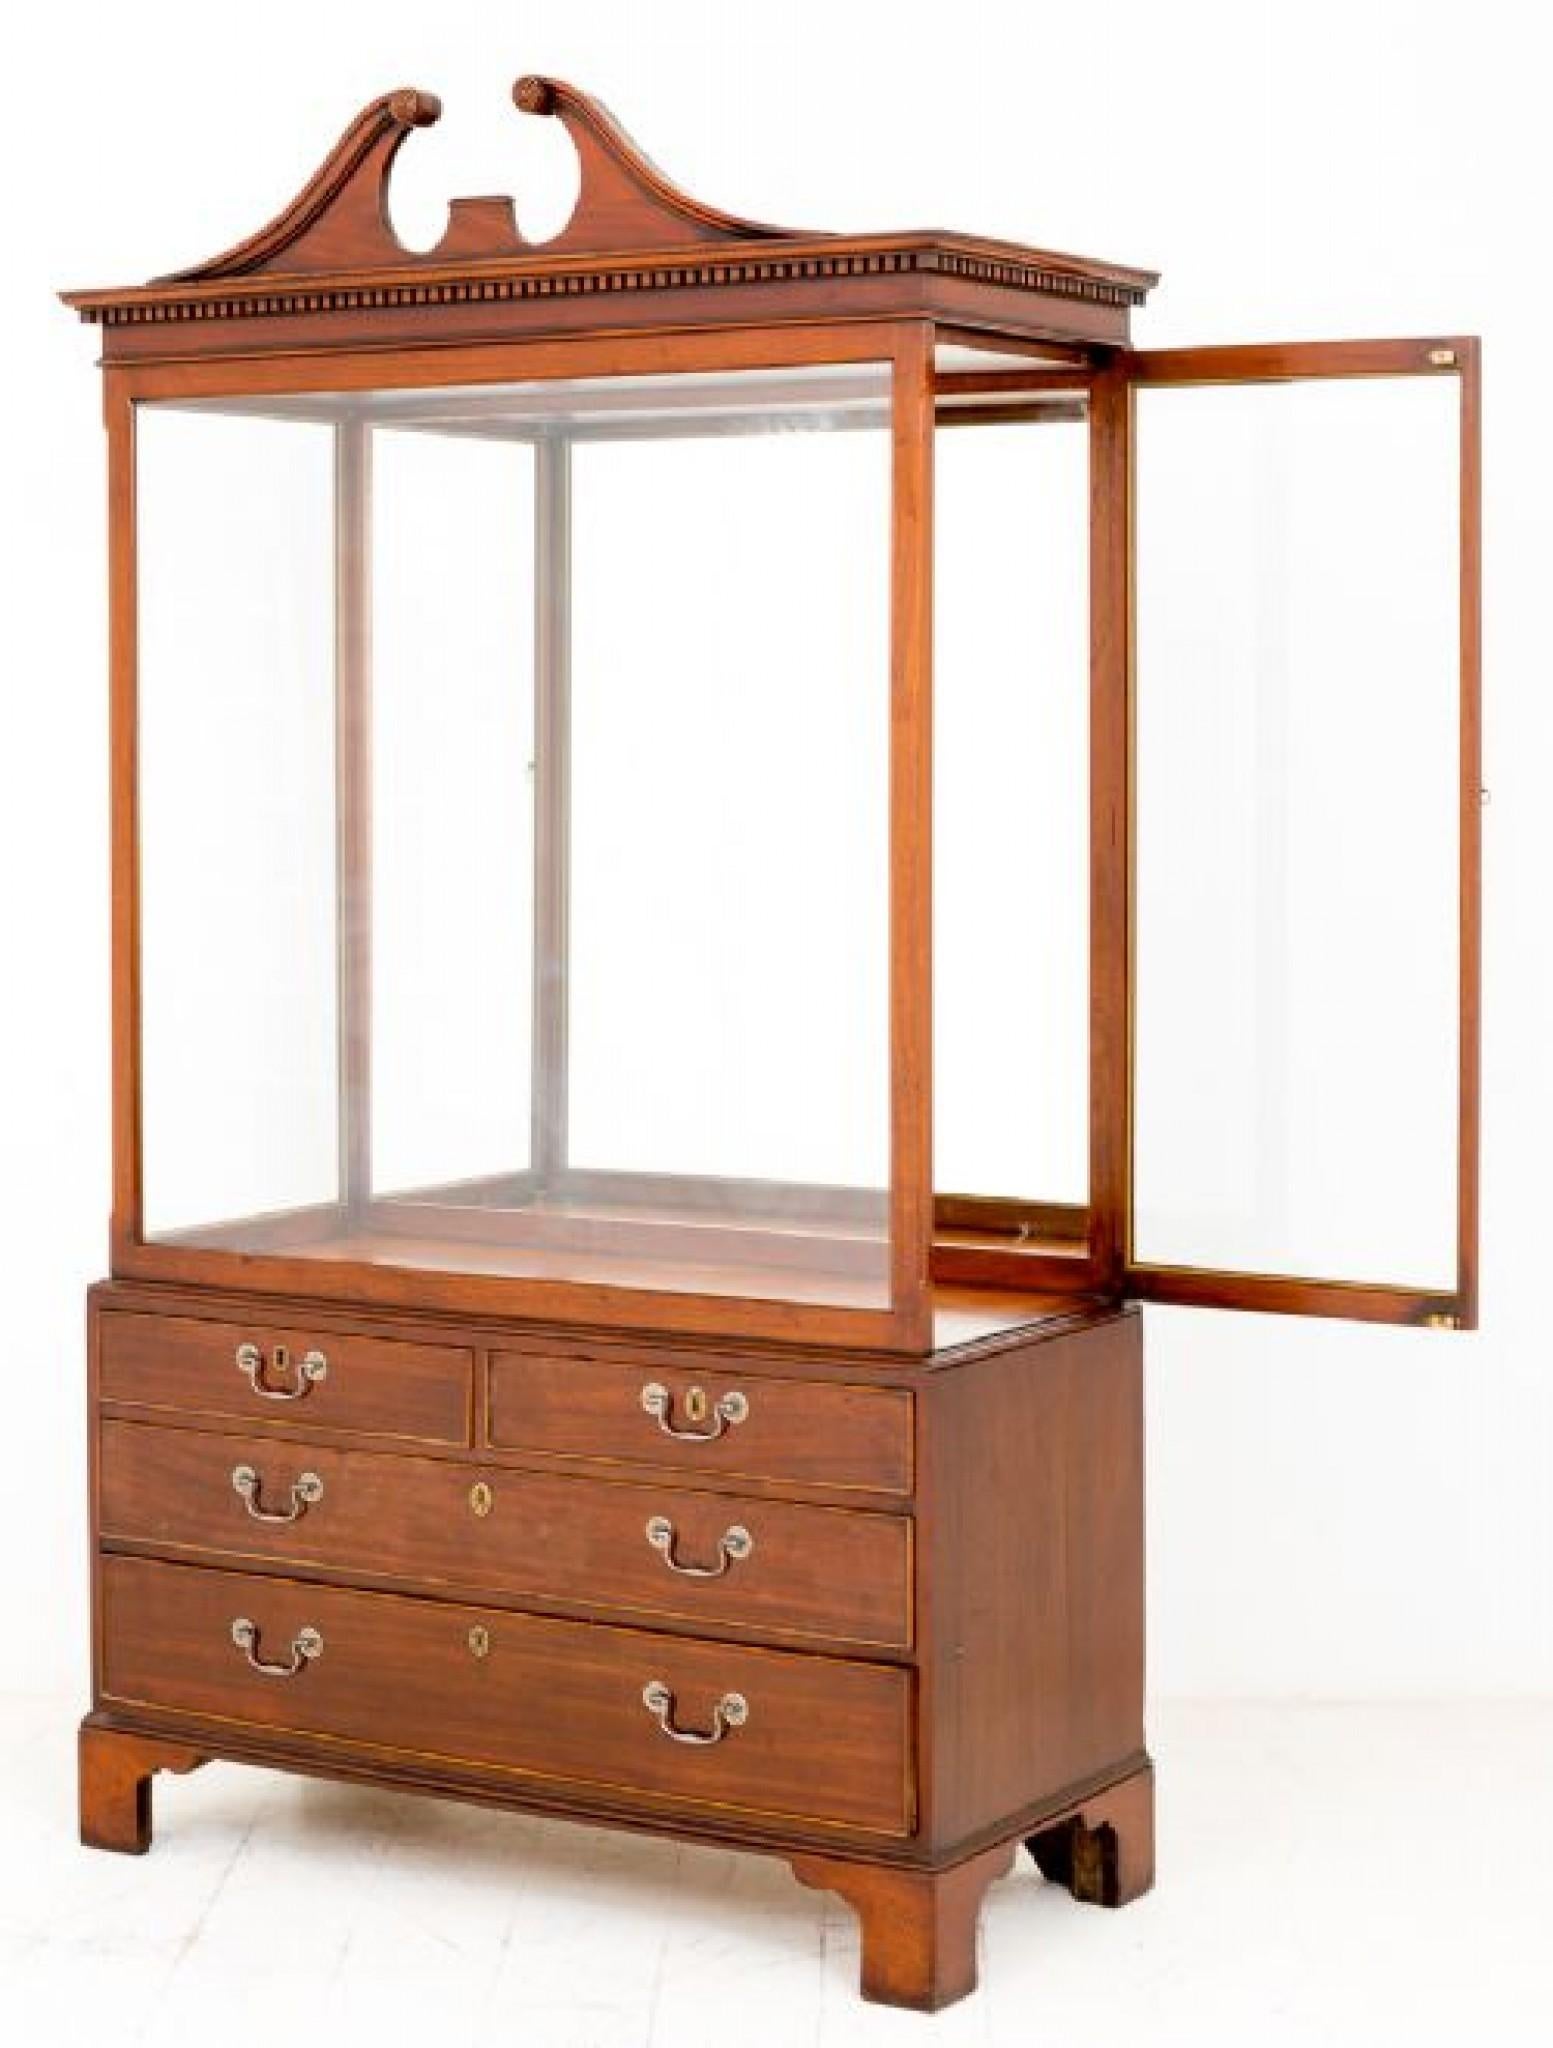 Antique Display Cabinet - Georgian Mahogany Specimen 1880 For Sale 1